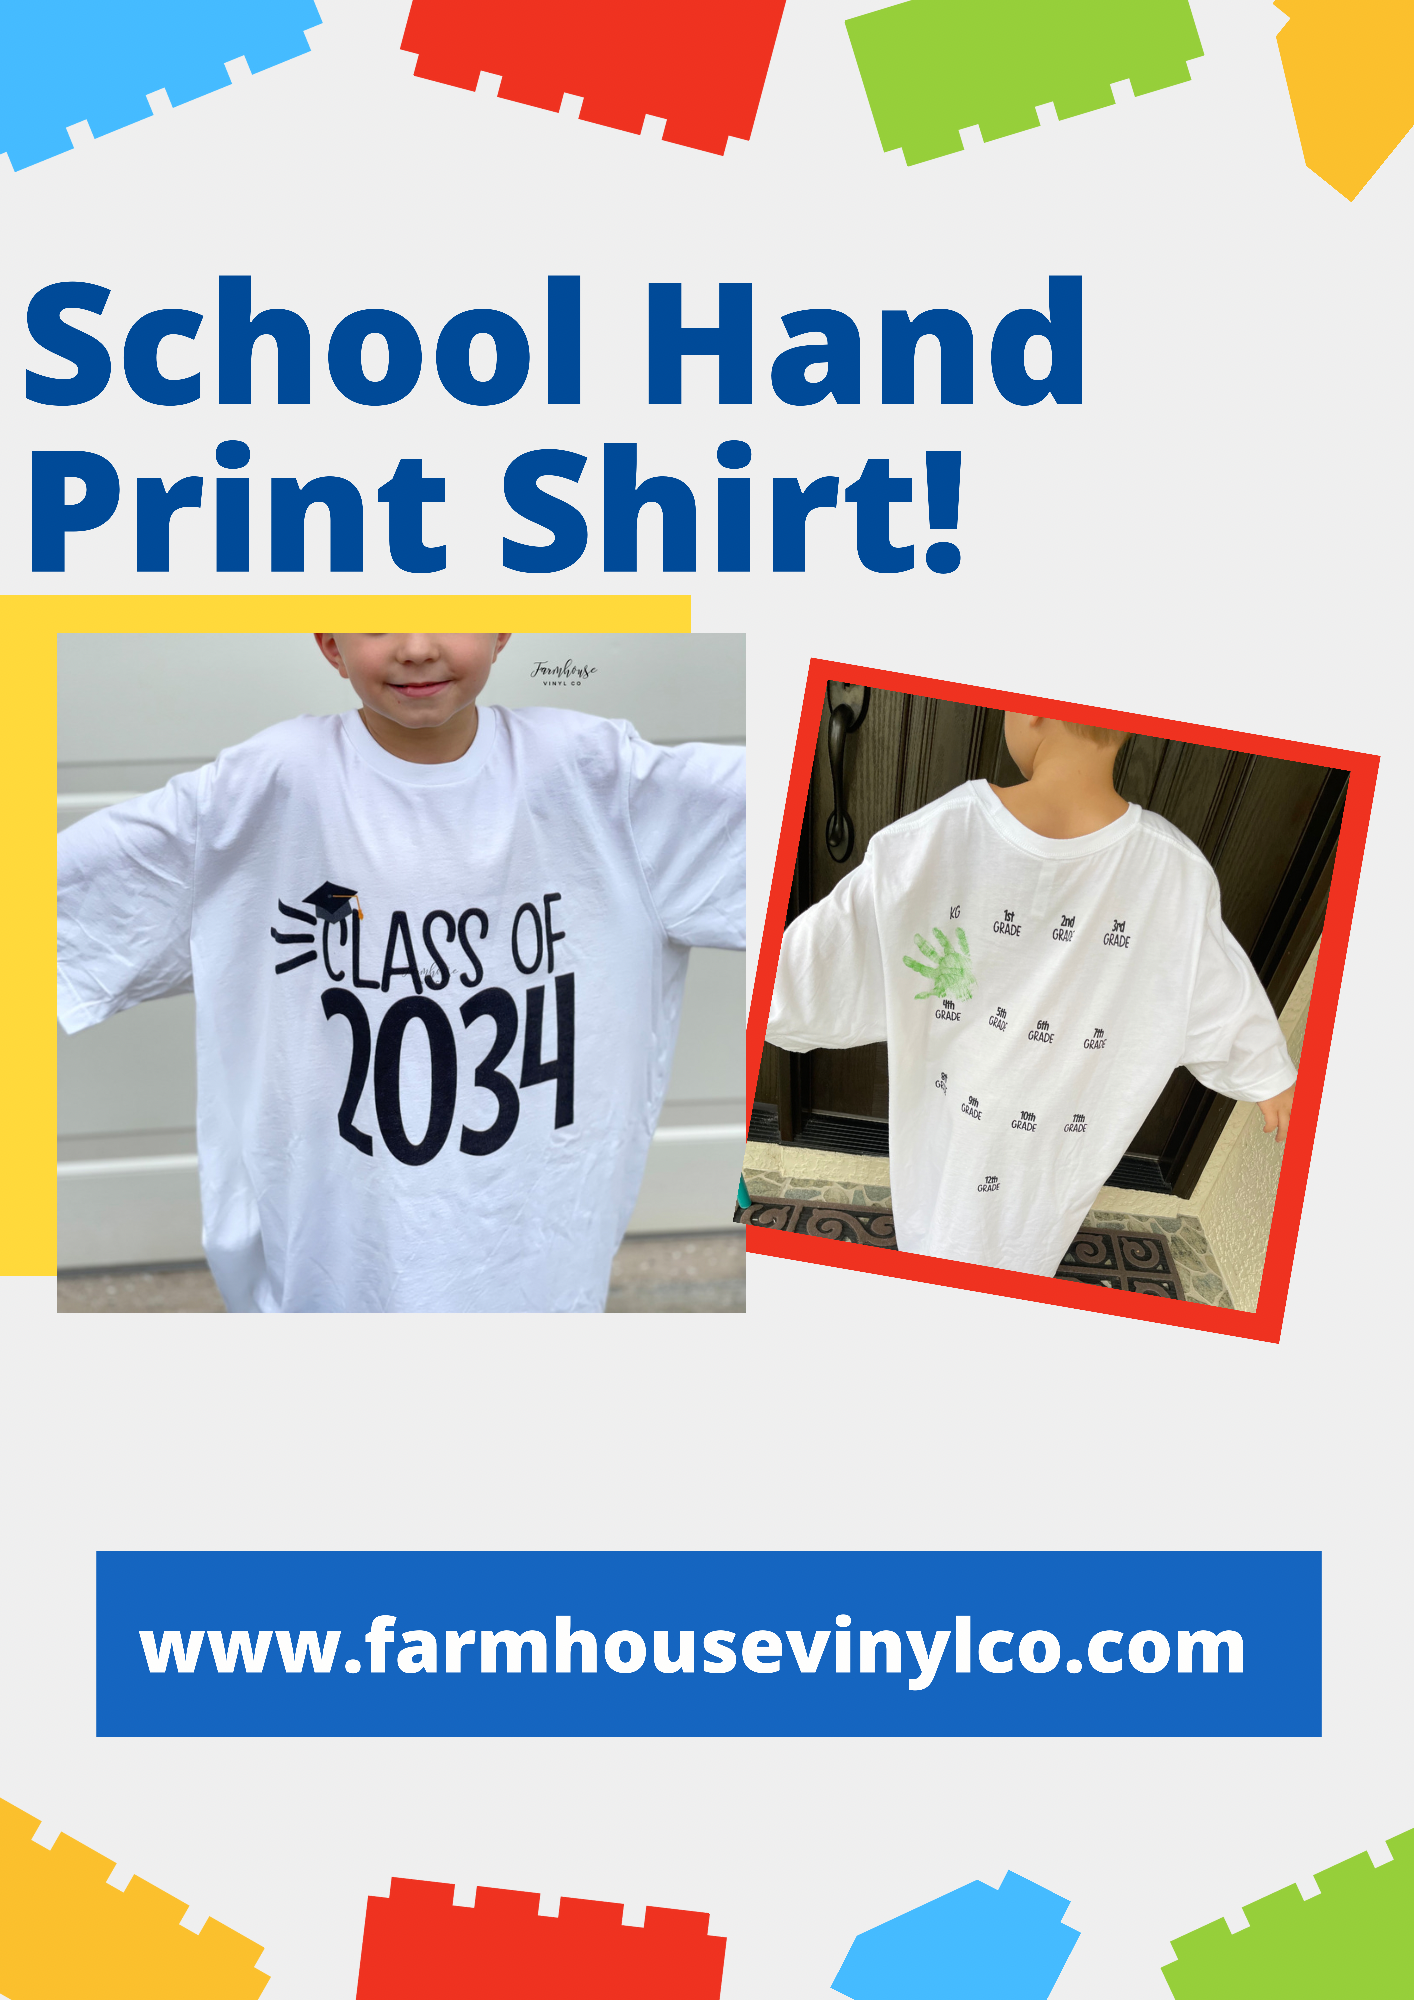 Class of 2034 Hand Print Shirt - Farmhouse Vinyl Co